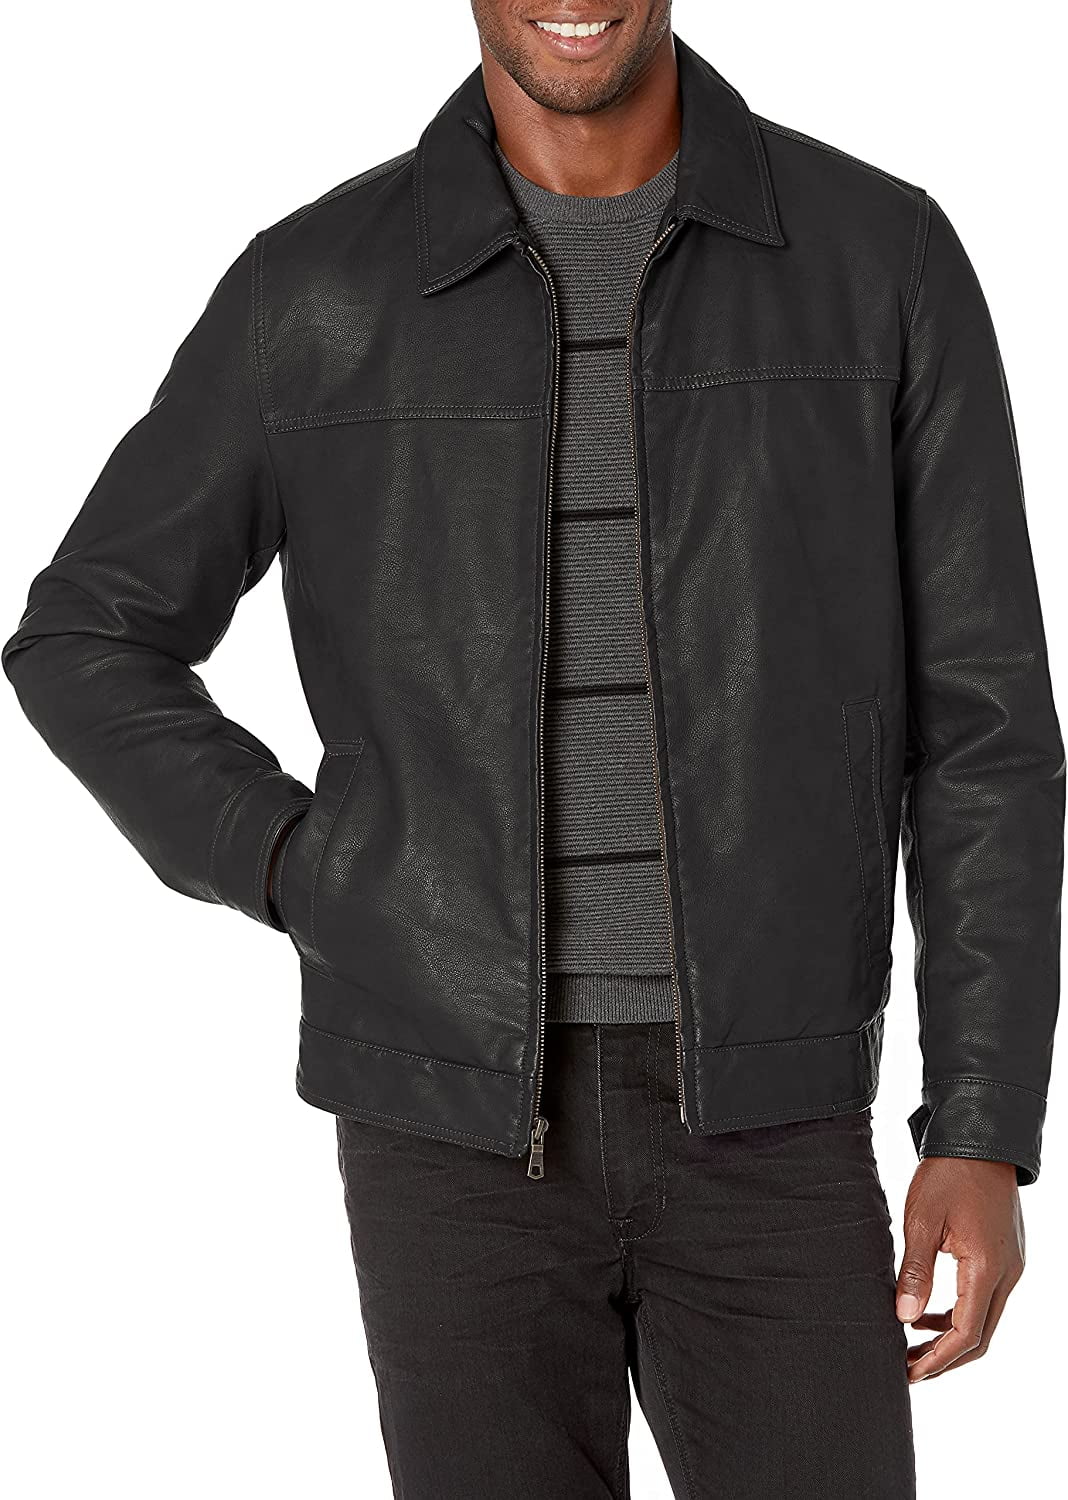 Hilfiger Mens Classic Faux Leather Jacket Medium Dark - Walmart.com